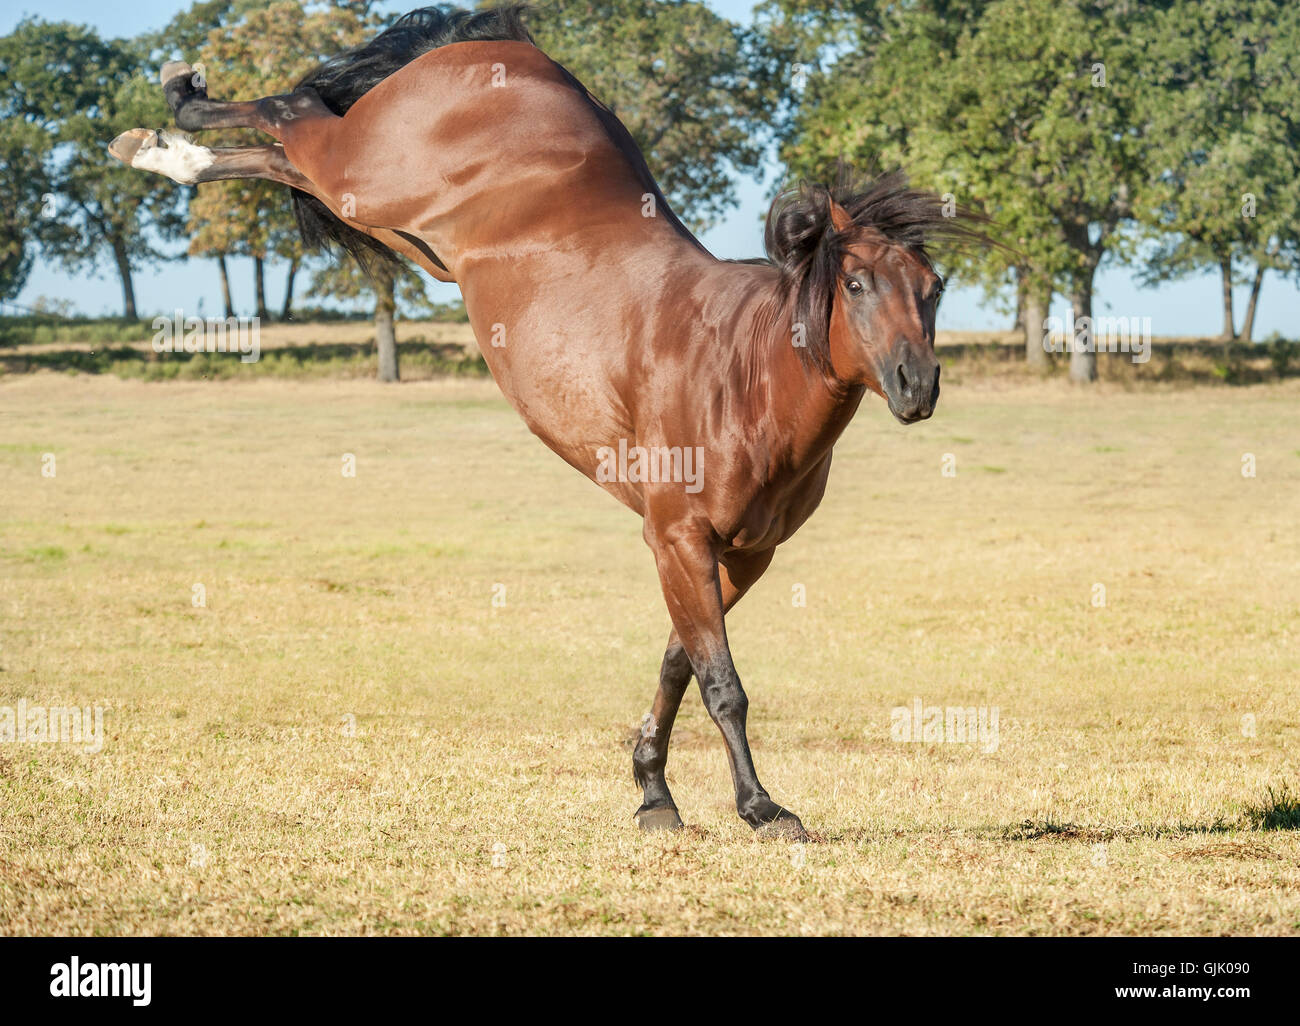 Bay Quarter Horse stallion bucking in play Stock Photo